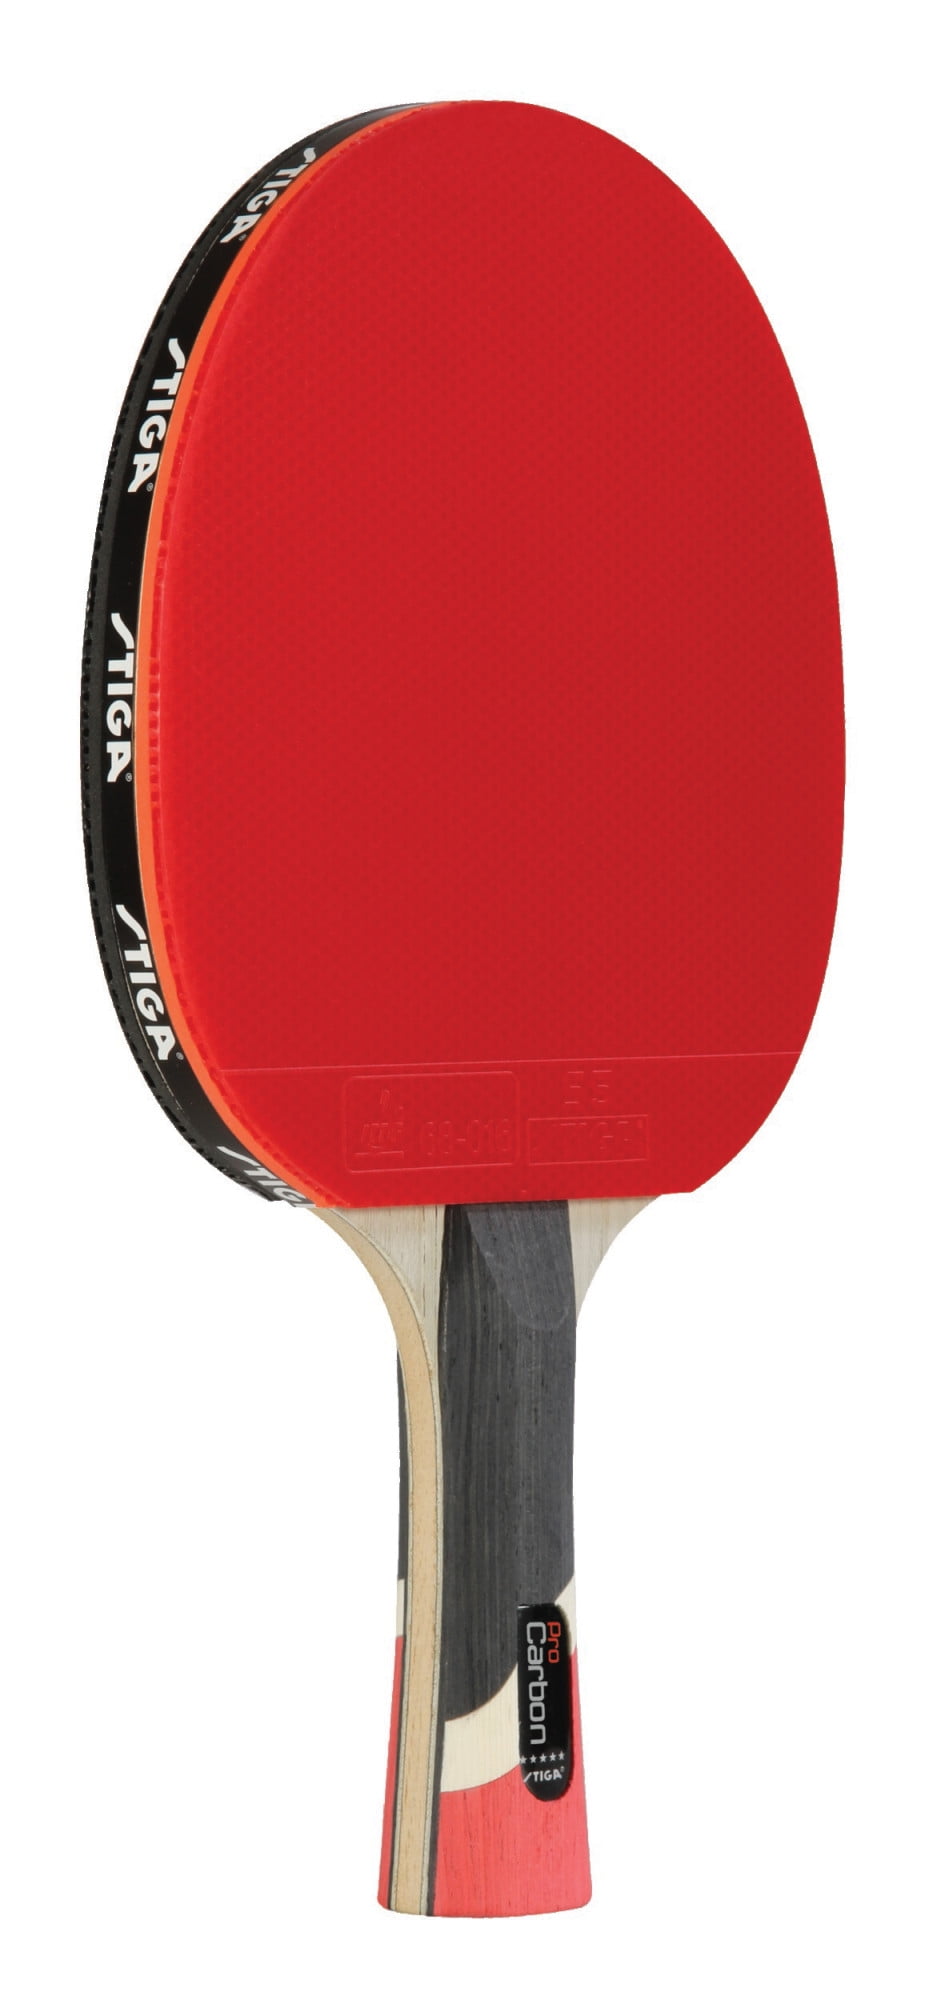 Stiga Pro Carbon Premium Ping Pong Table Tennis Paddle Racket 